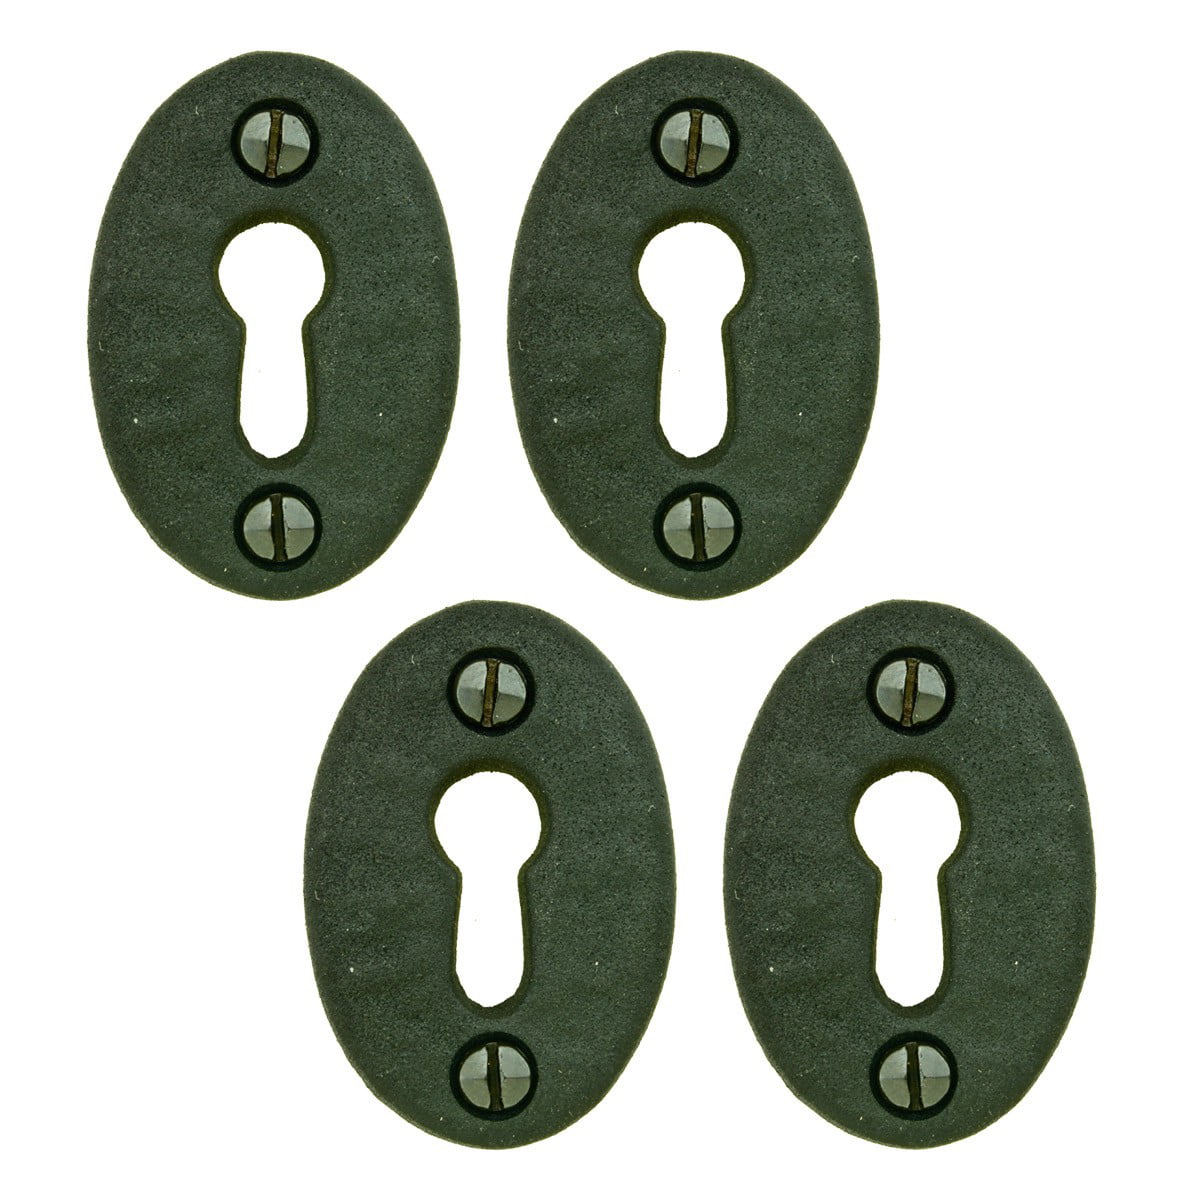 Covered Keyhole Escutcheon Lock Cover Plate & Screws 